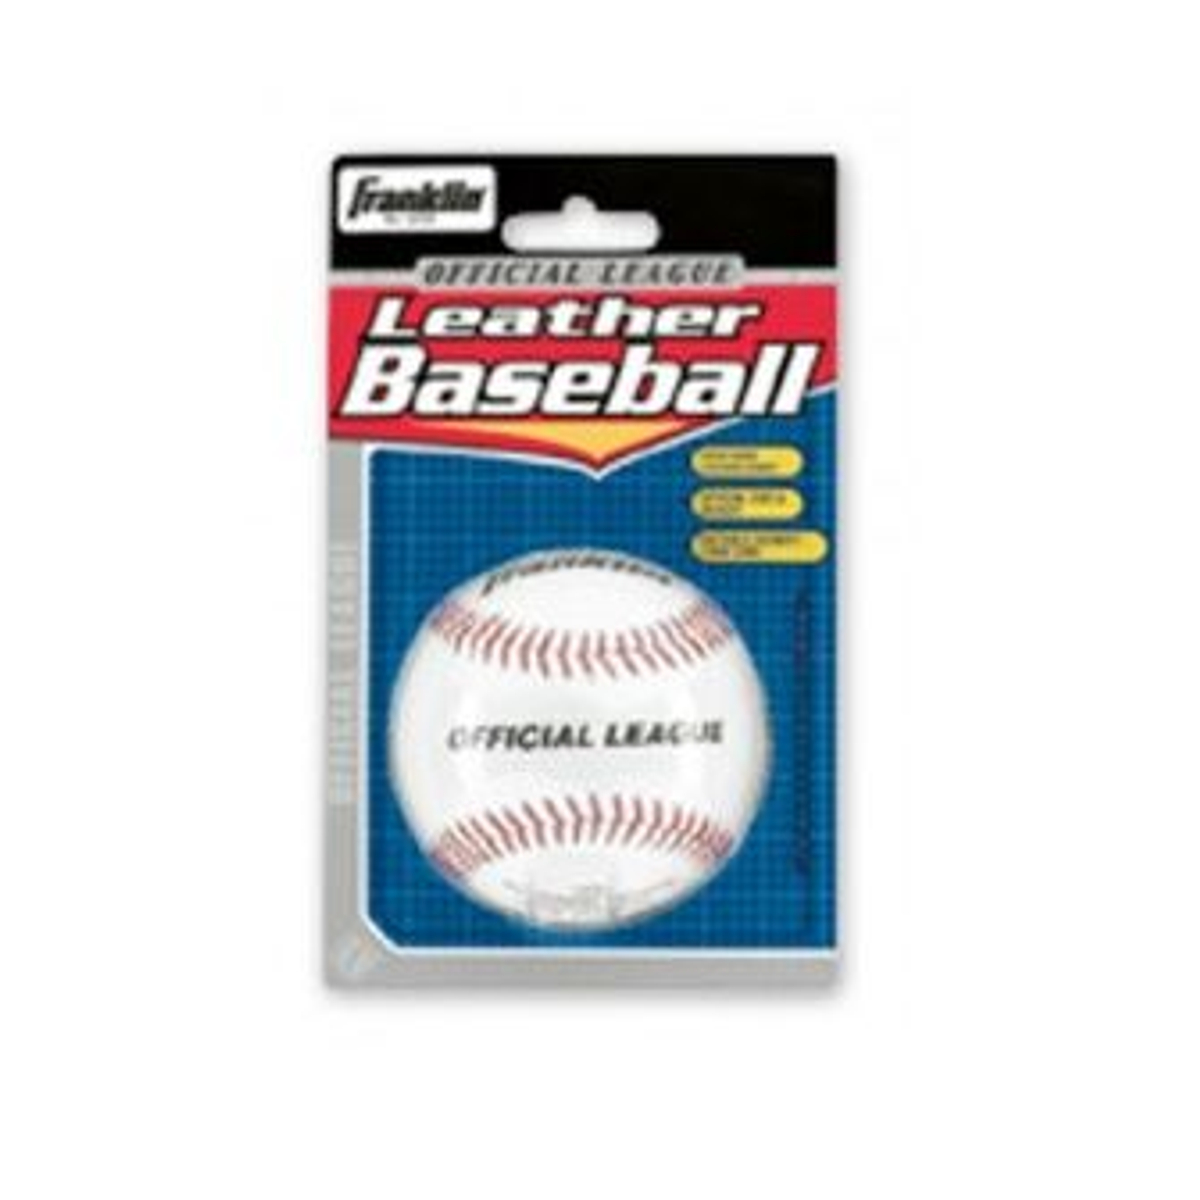 Franklin 1533/1570 leather baseball